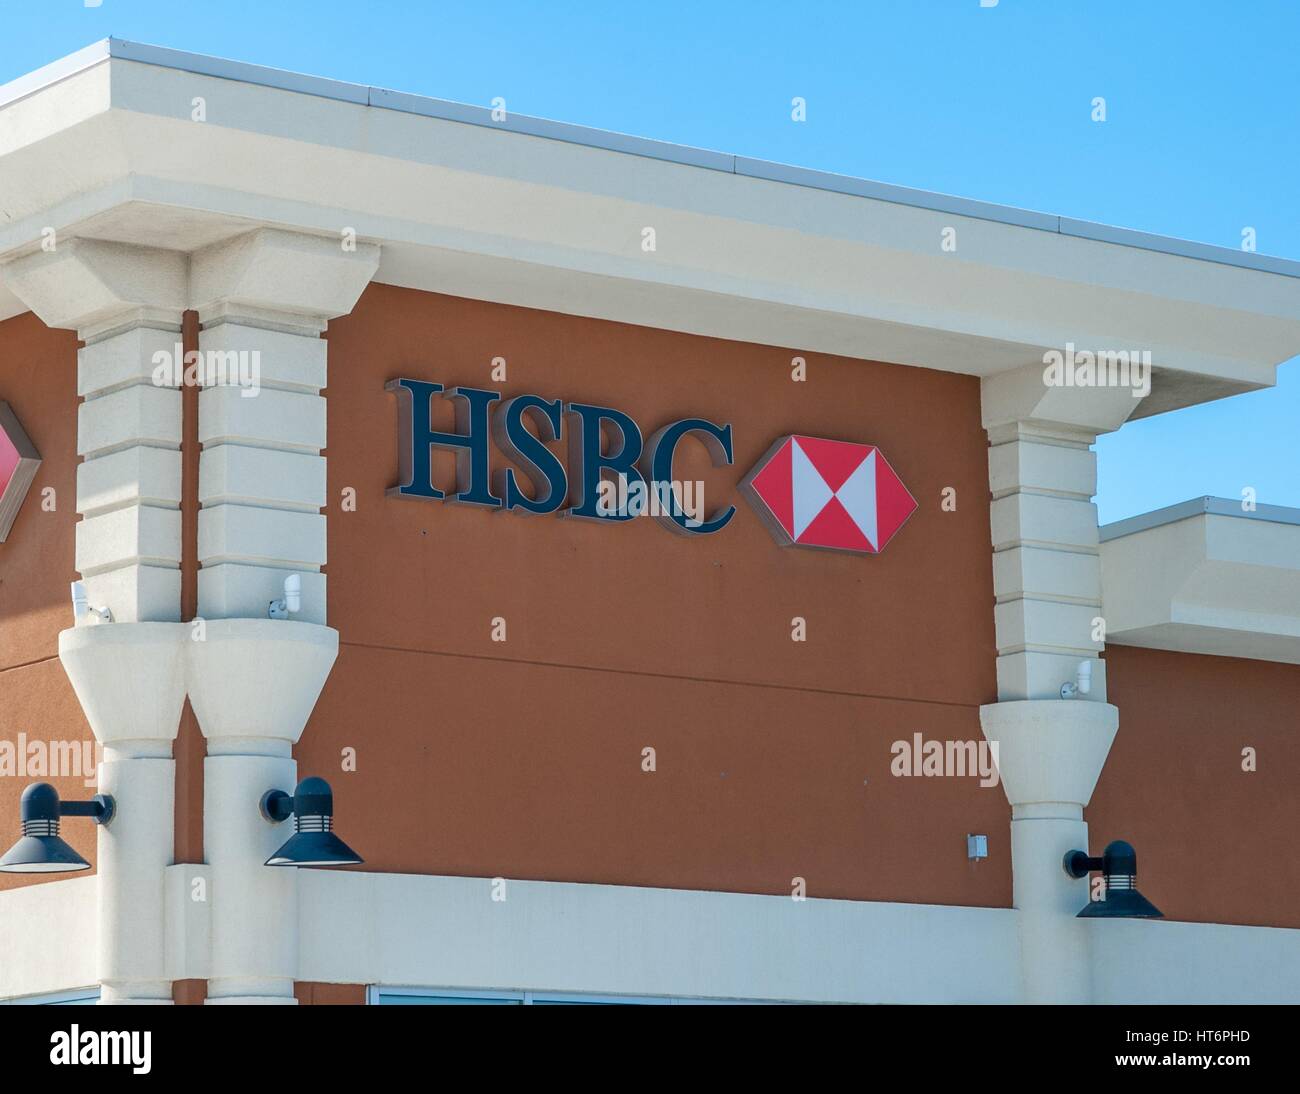 A HSBC Bank branch in Calgary, Alberta, Canada. Stock Photo